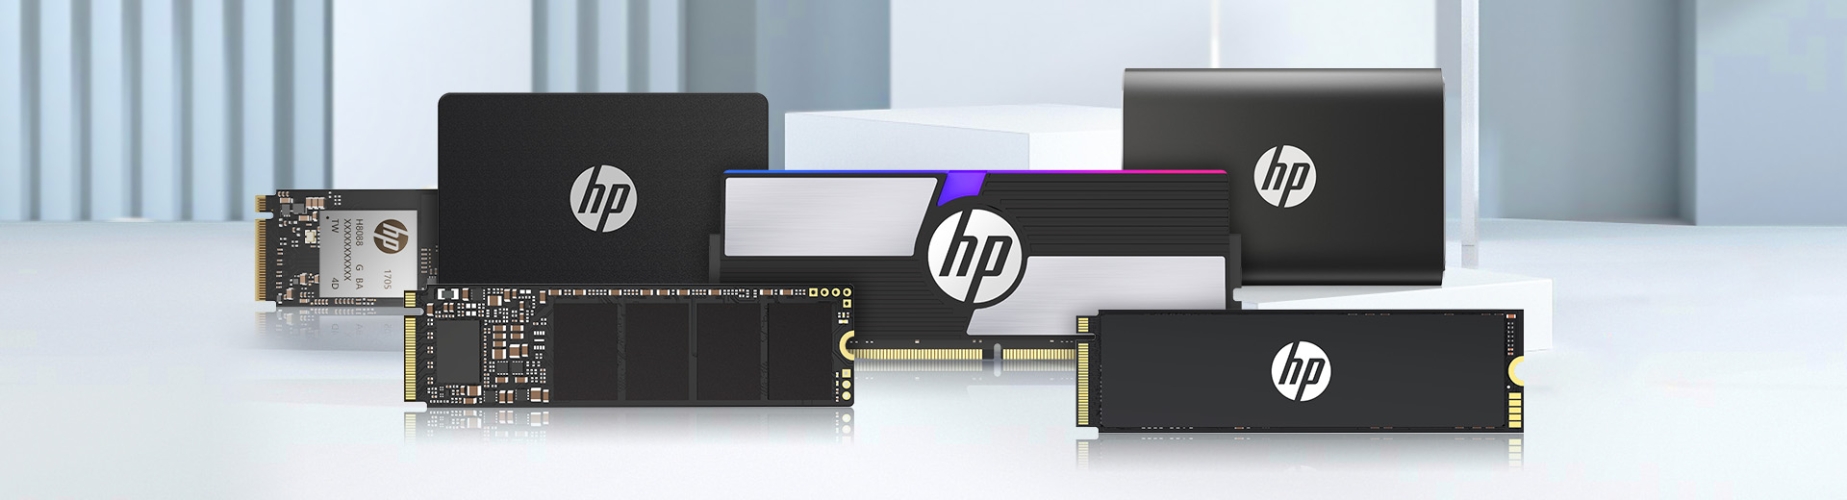 HP storage flash memory, DRAM memory, 2.5 inch SSD and M.2 SSD